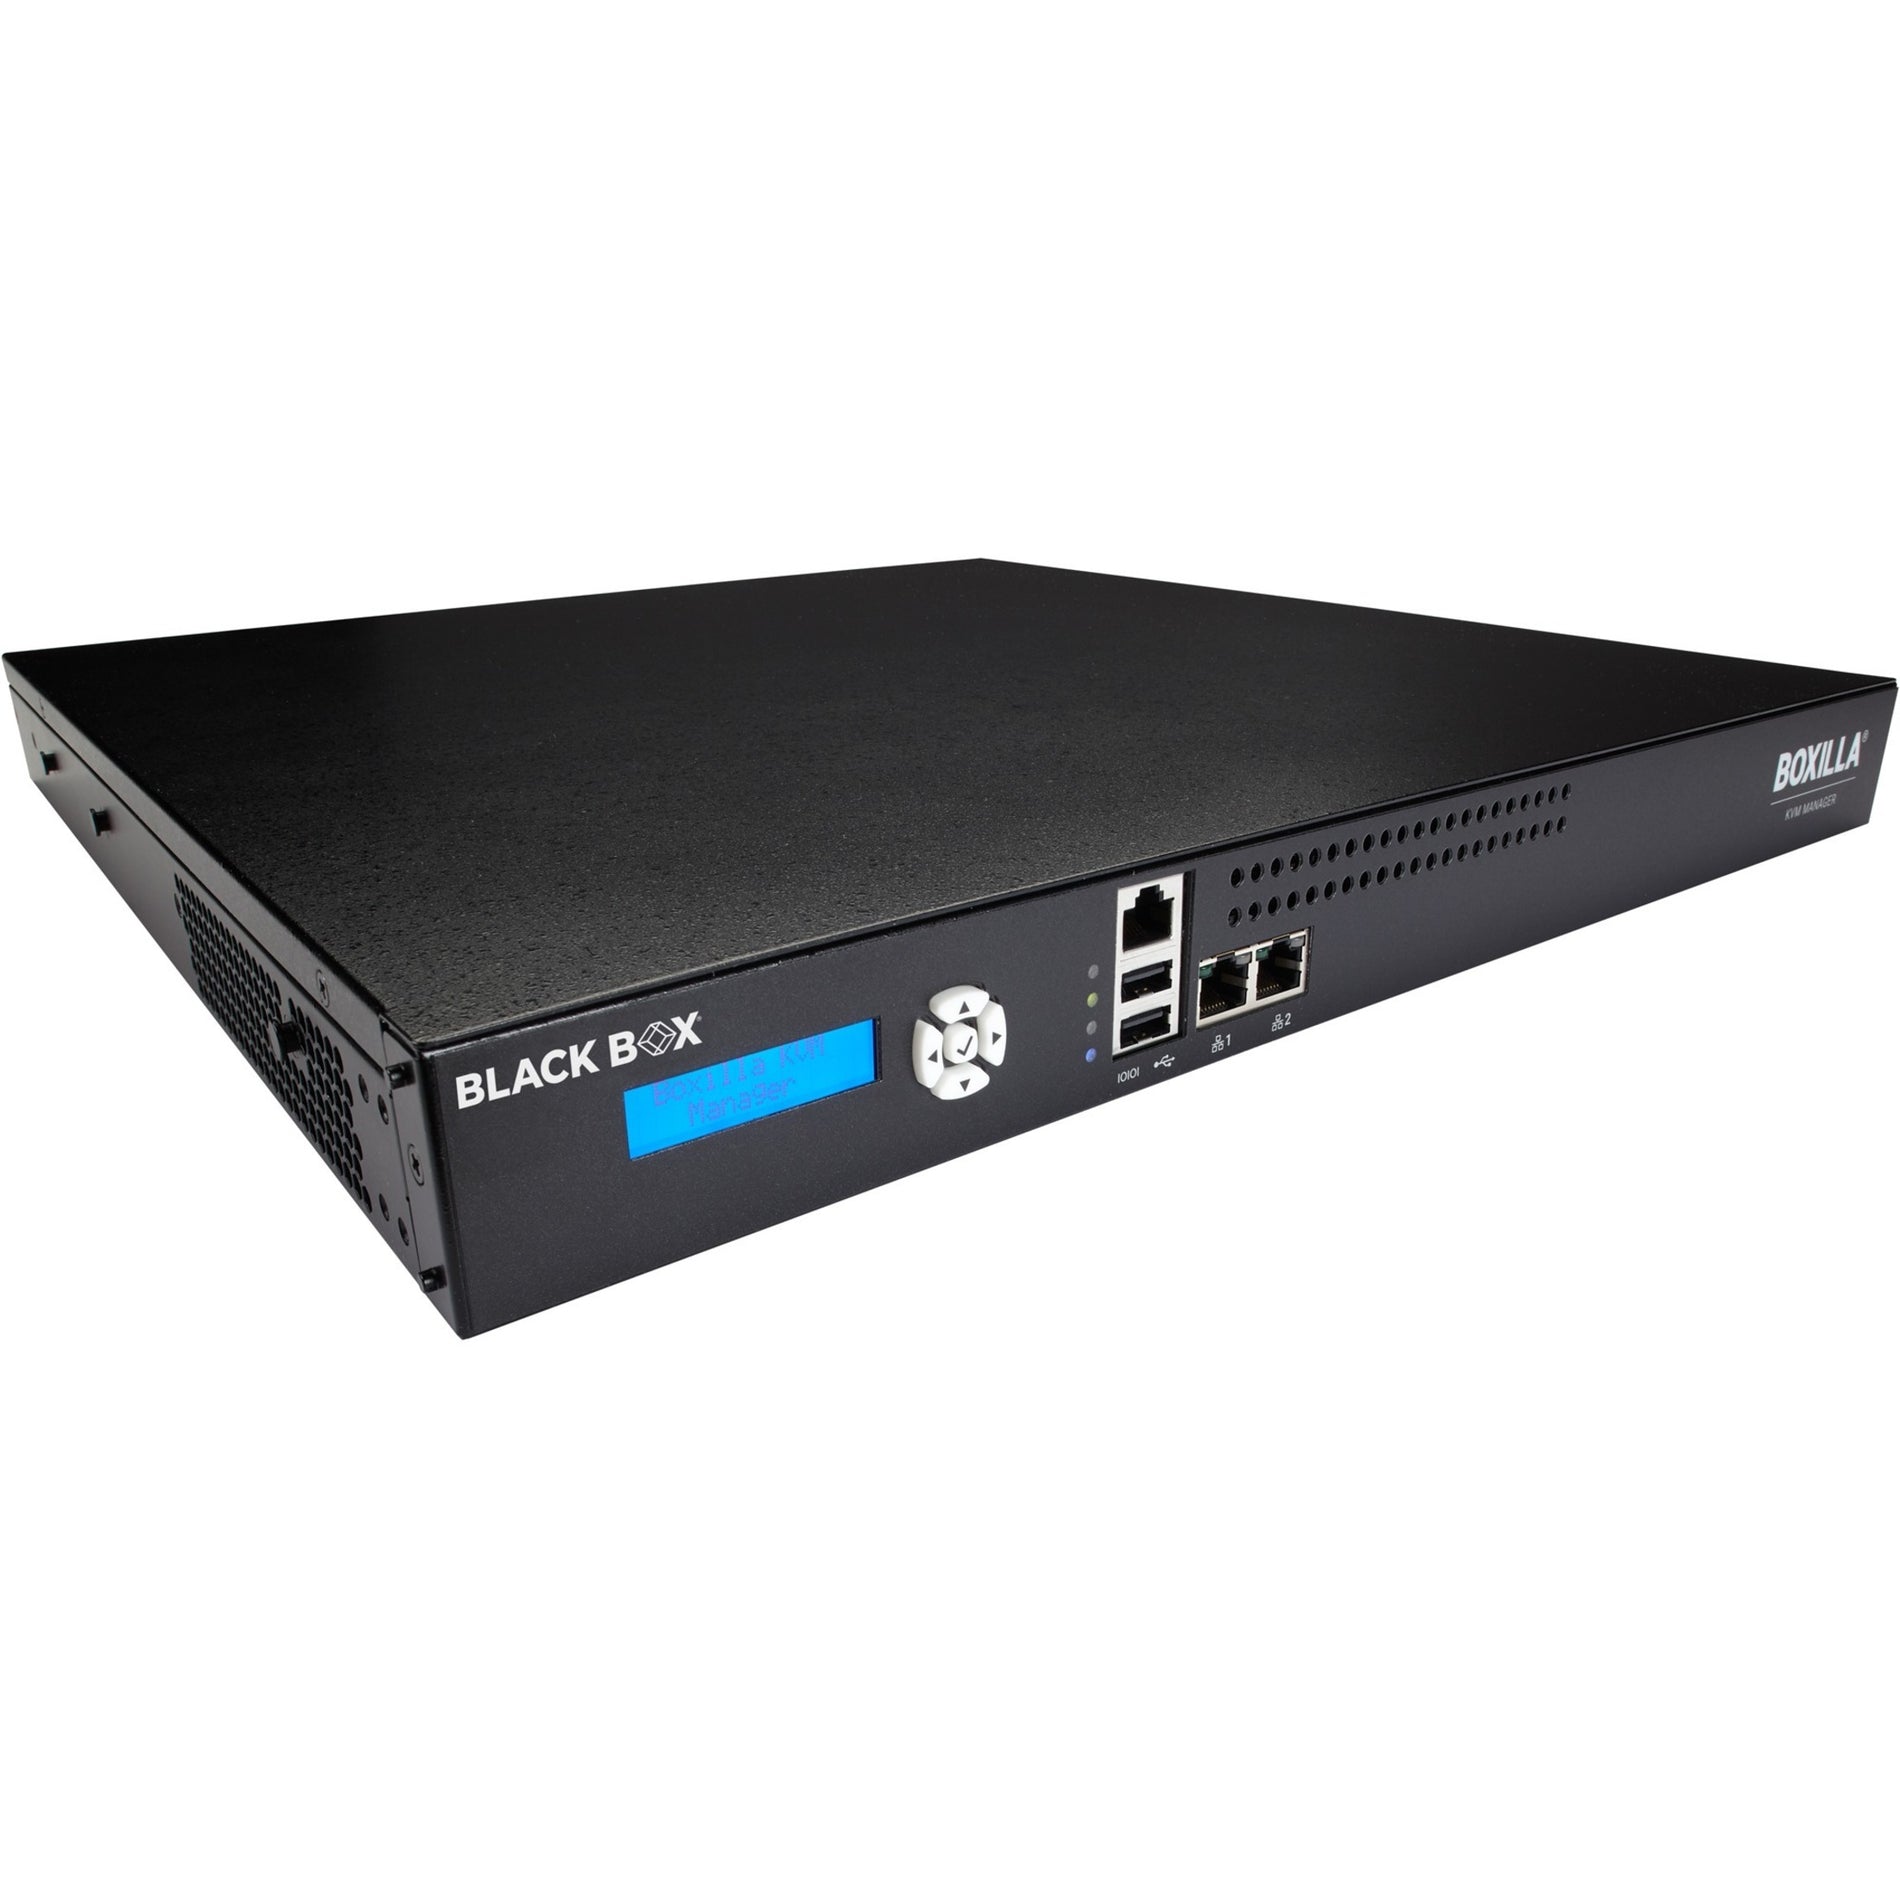 Black Box BXAMGR-R2-ULT Boxilla KVM Manager with Unlimited Device License, USB, Network (RJ-45), 2 USB Ports, 3 Network (RJ-45) Ports